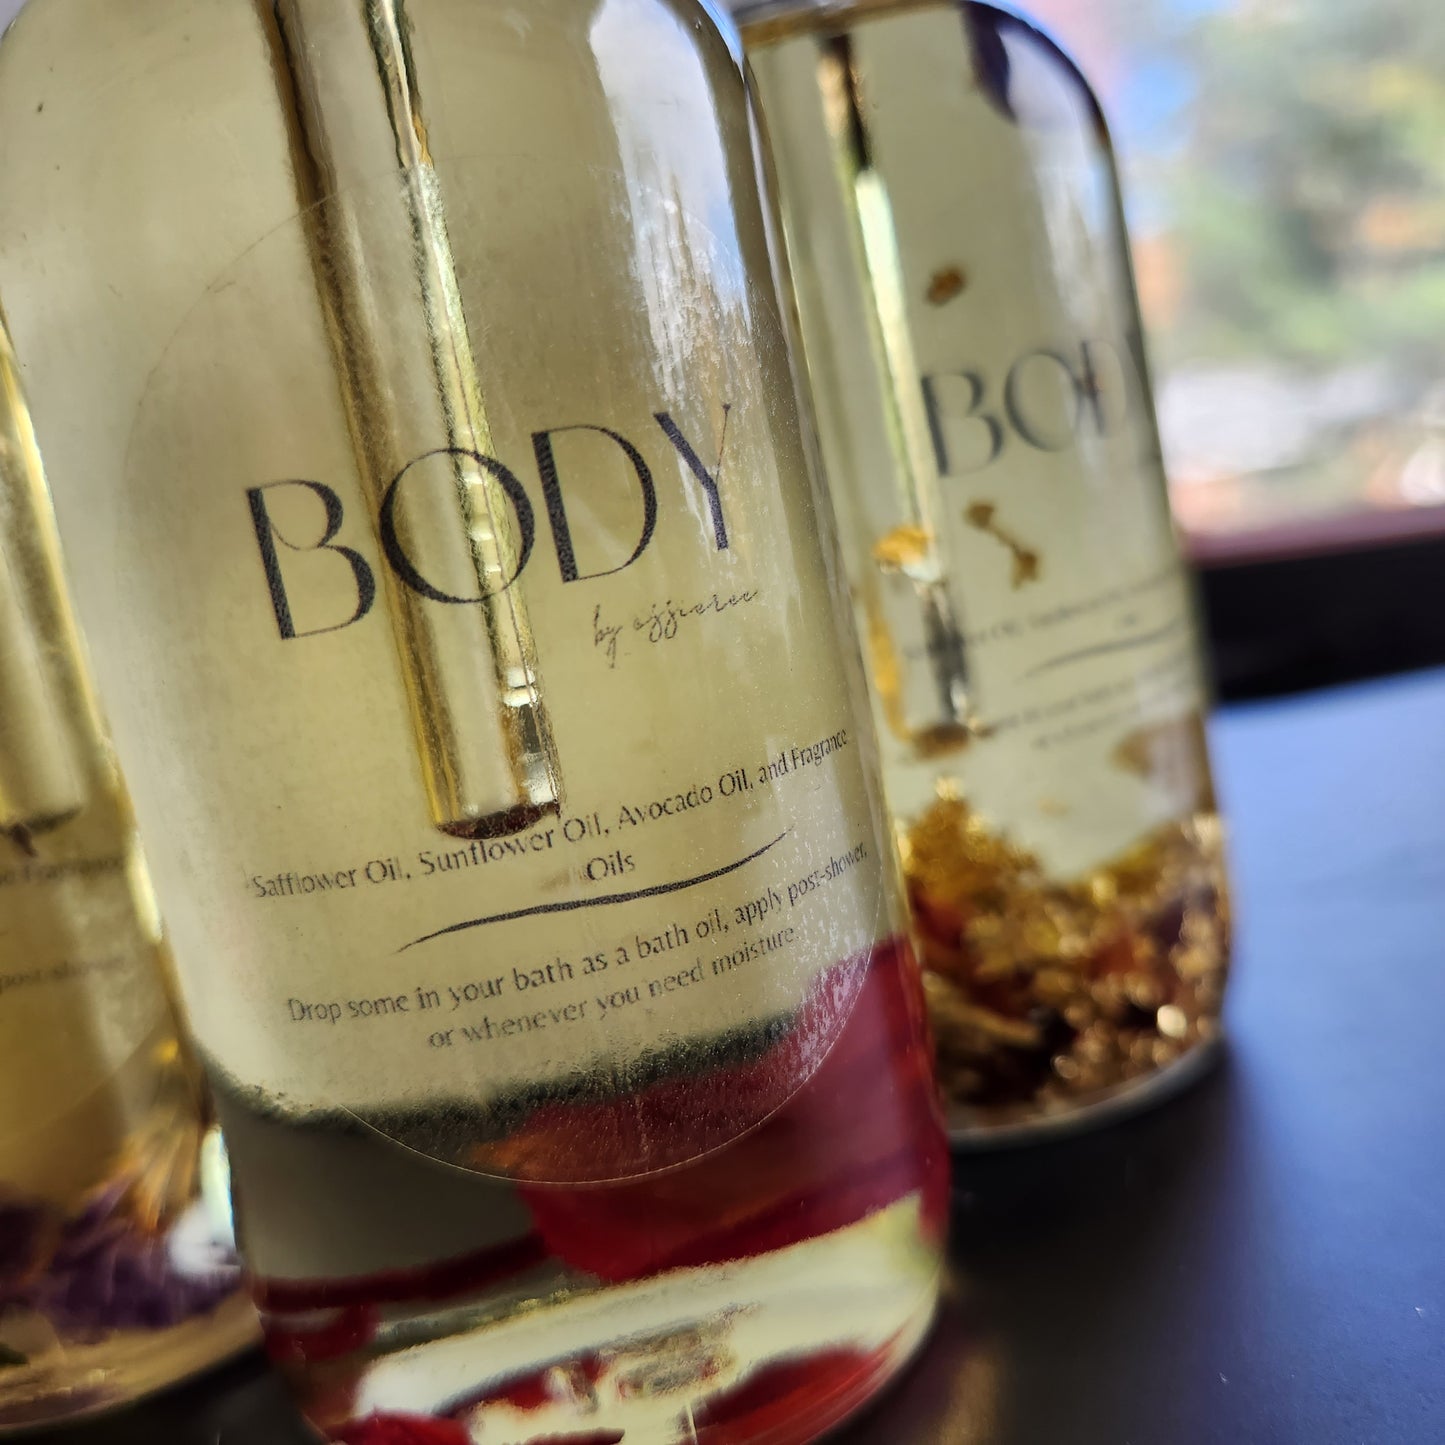 "BODY" fragrance body oil - ESSIEREE